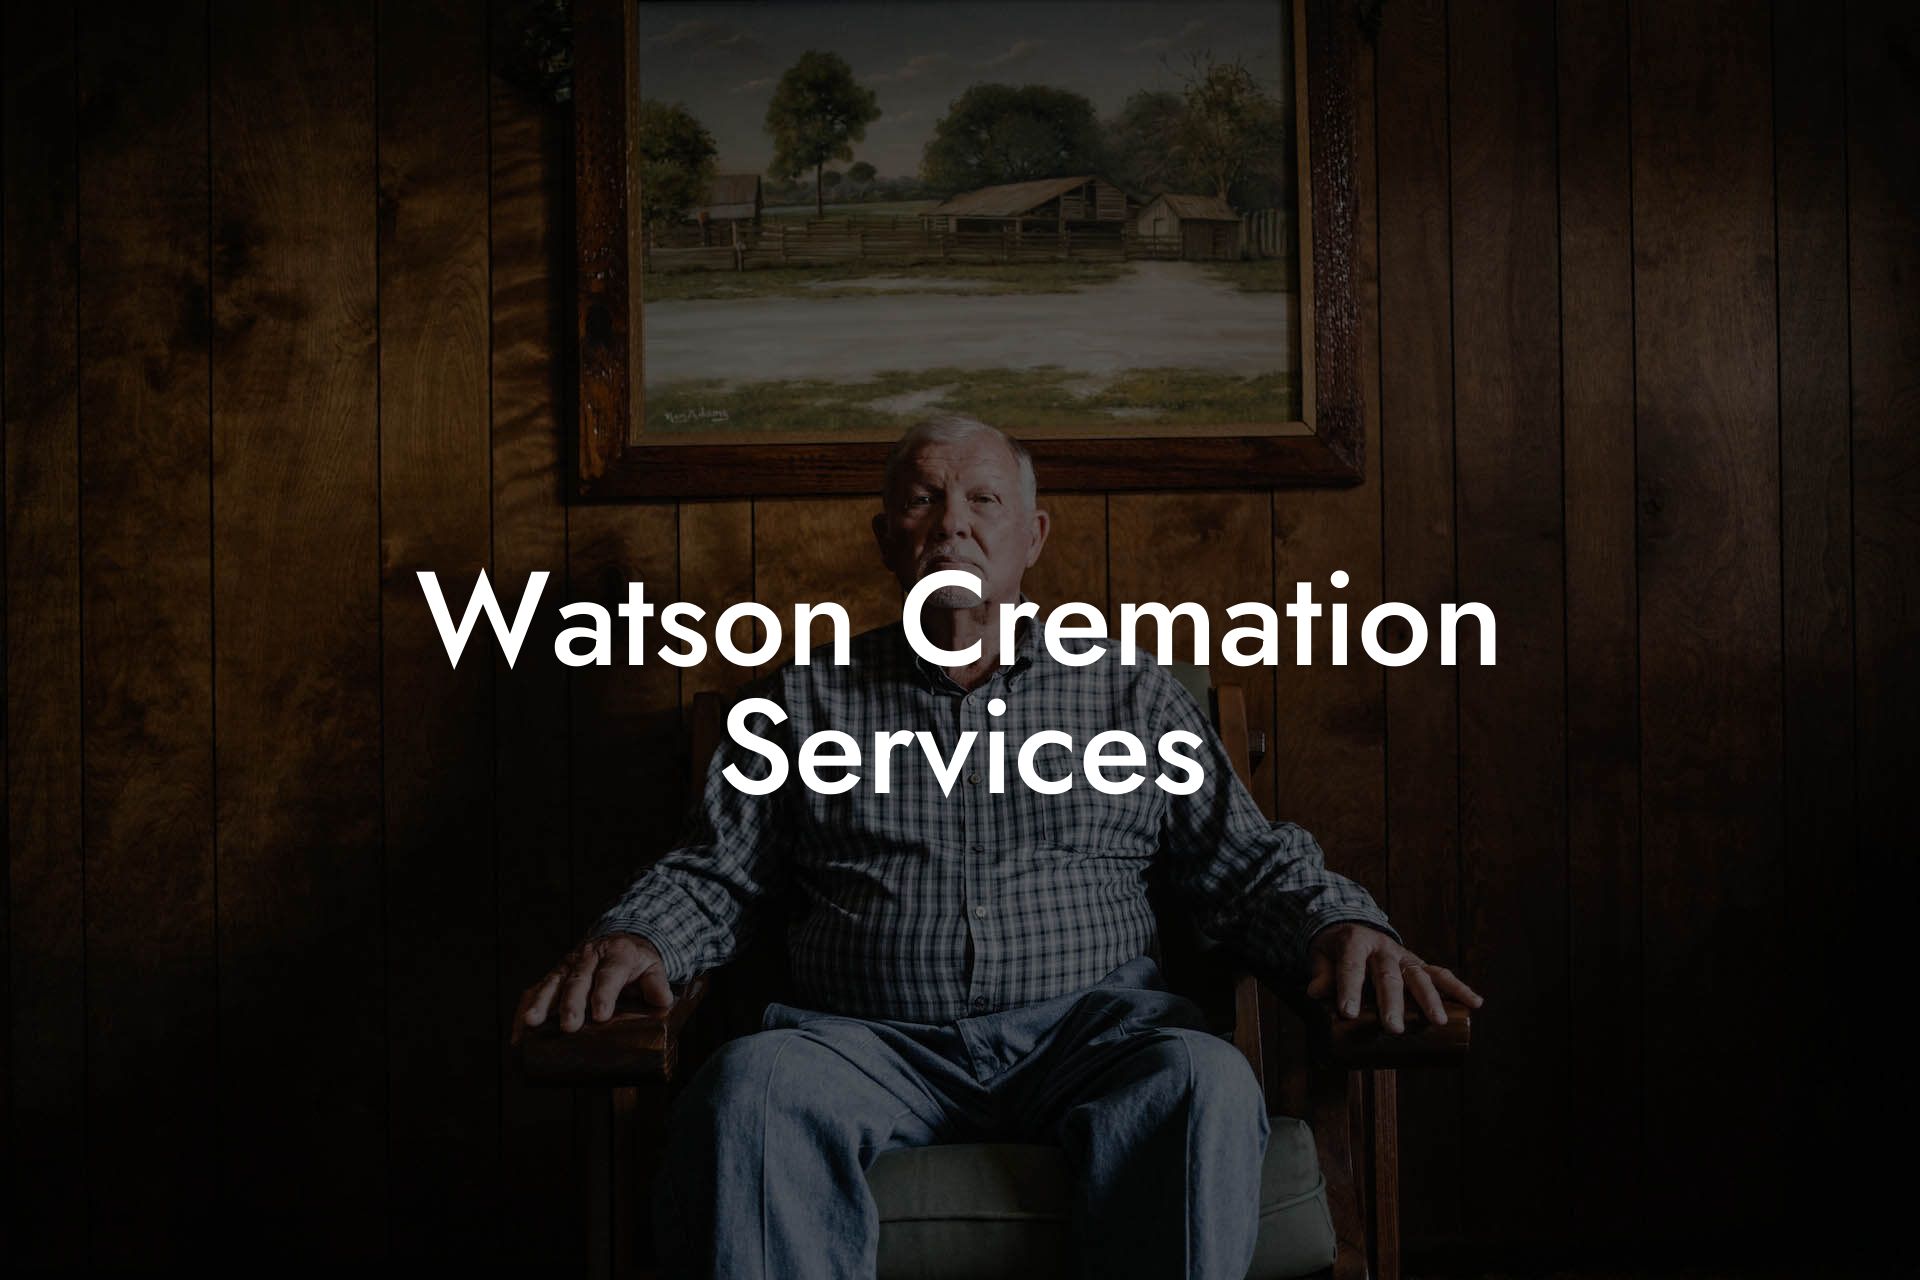 Watson Cremation Services